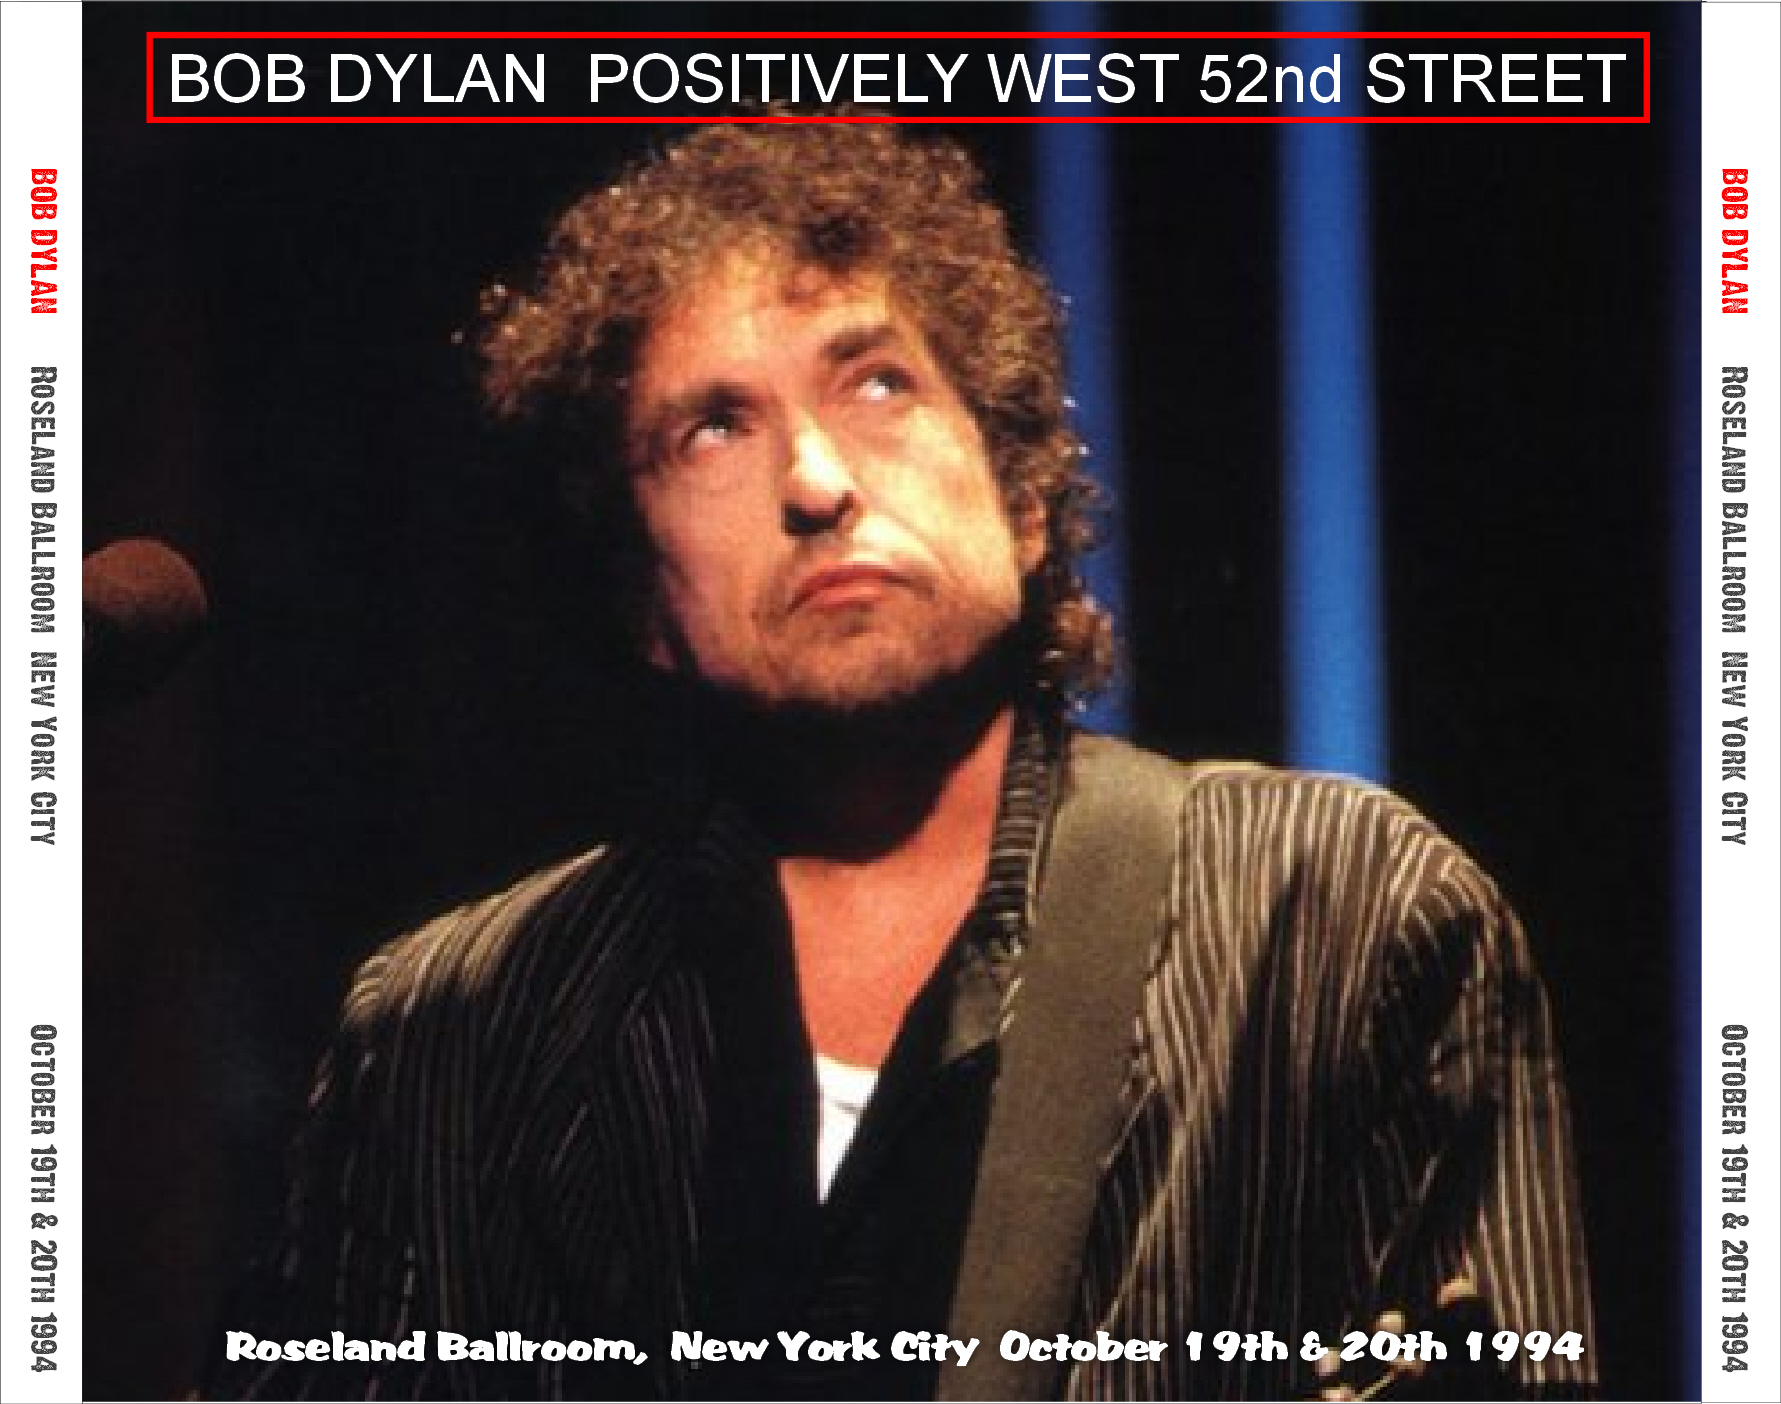 BobDylan1994-10-19and20RoselandNYPositivelyWest52ndStreet (4).jpeg